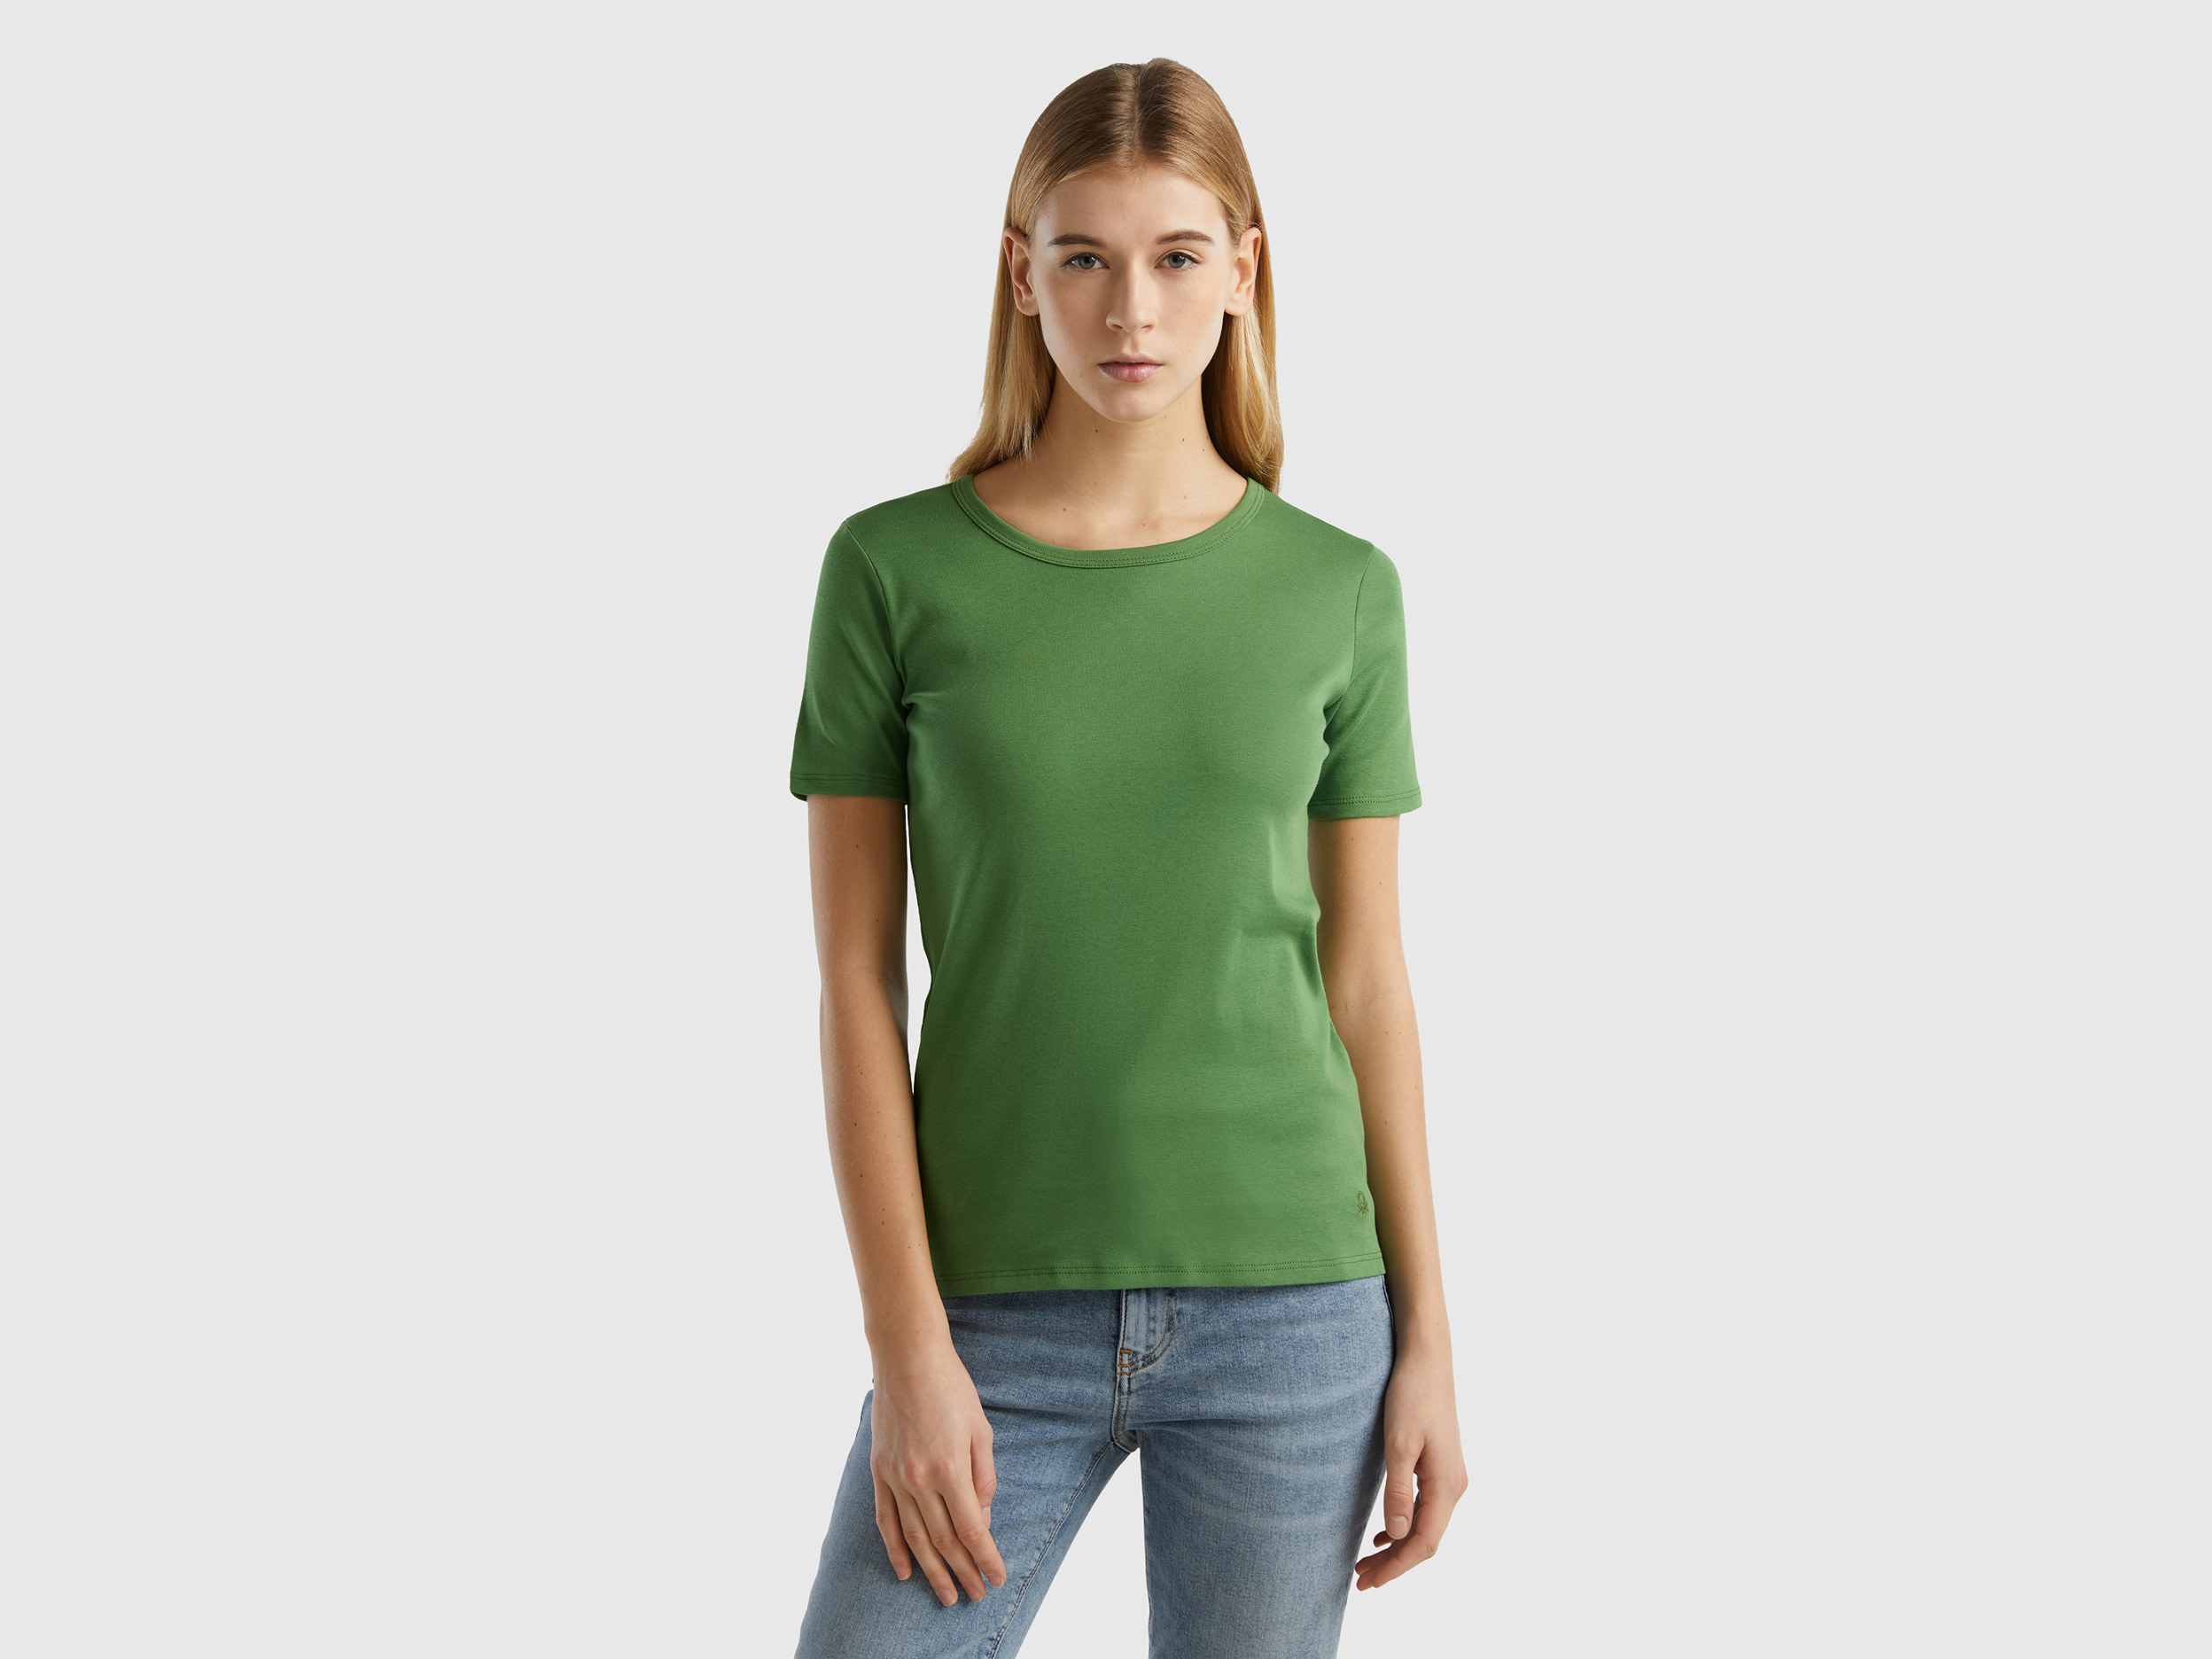 Benetton, Long Fiber Cotton T-shirt, size XXS, Military Green, Women